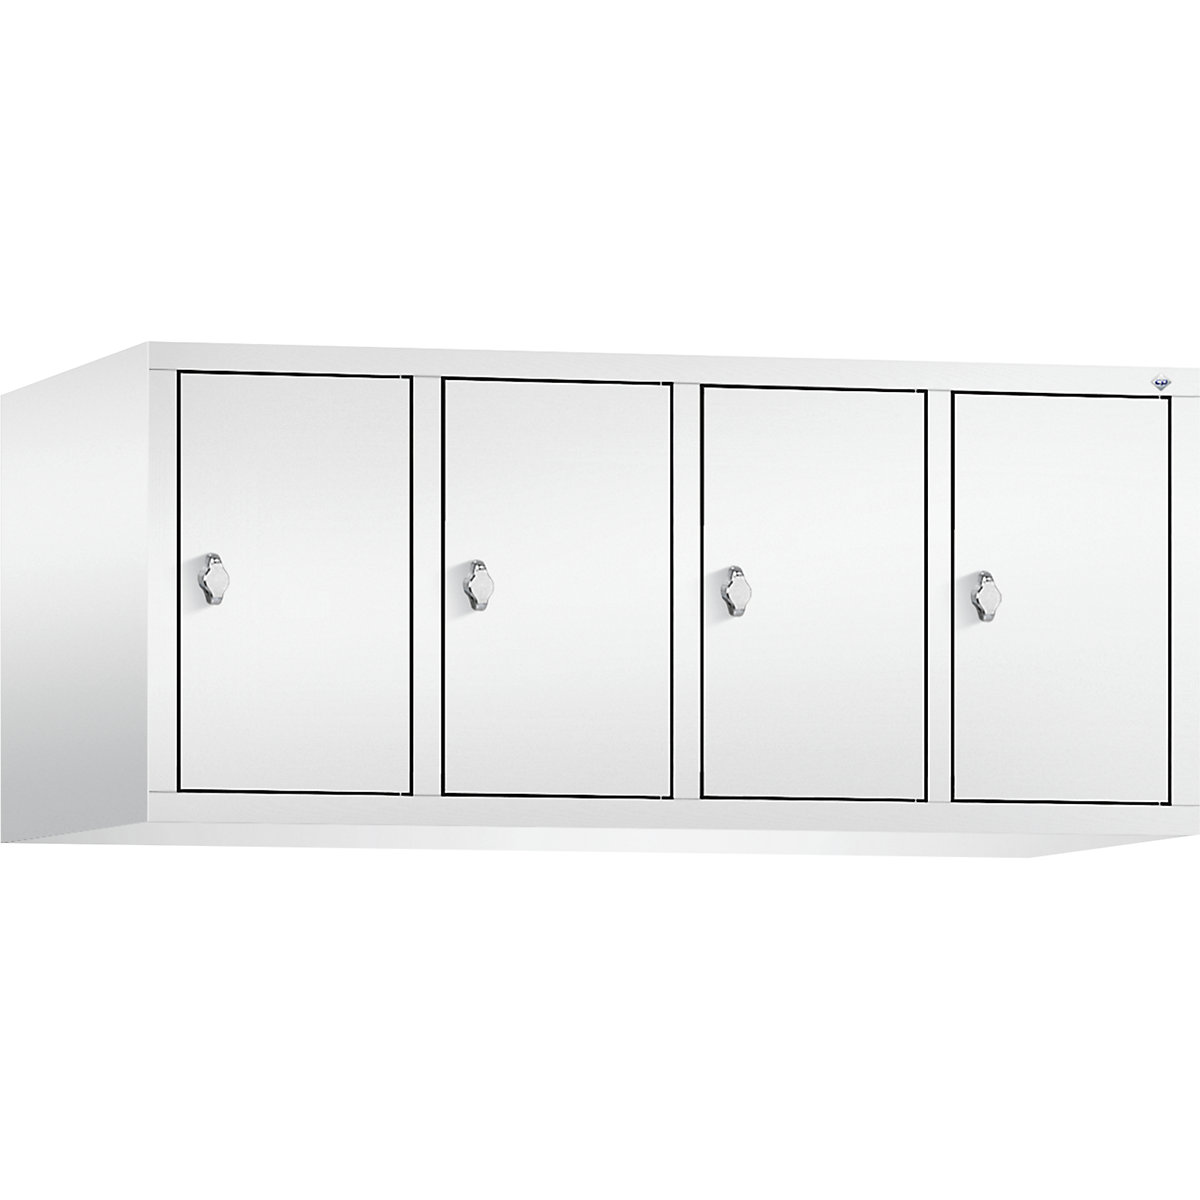 C+P – Altillo CLASSIC, 4 compartimentos, anchura de compartimento 300 mm, blanco tráfico